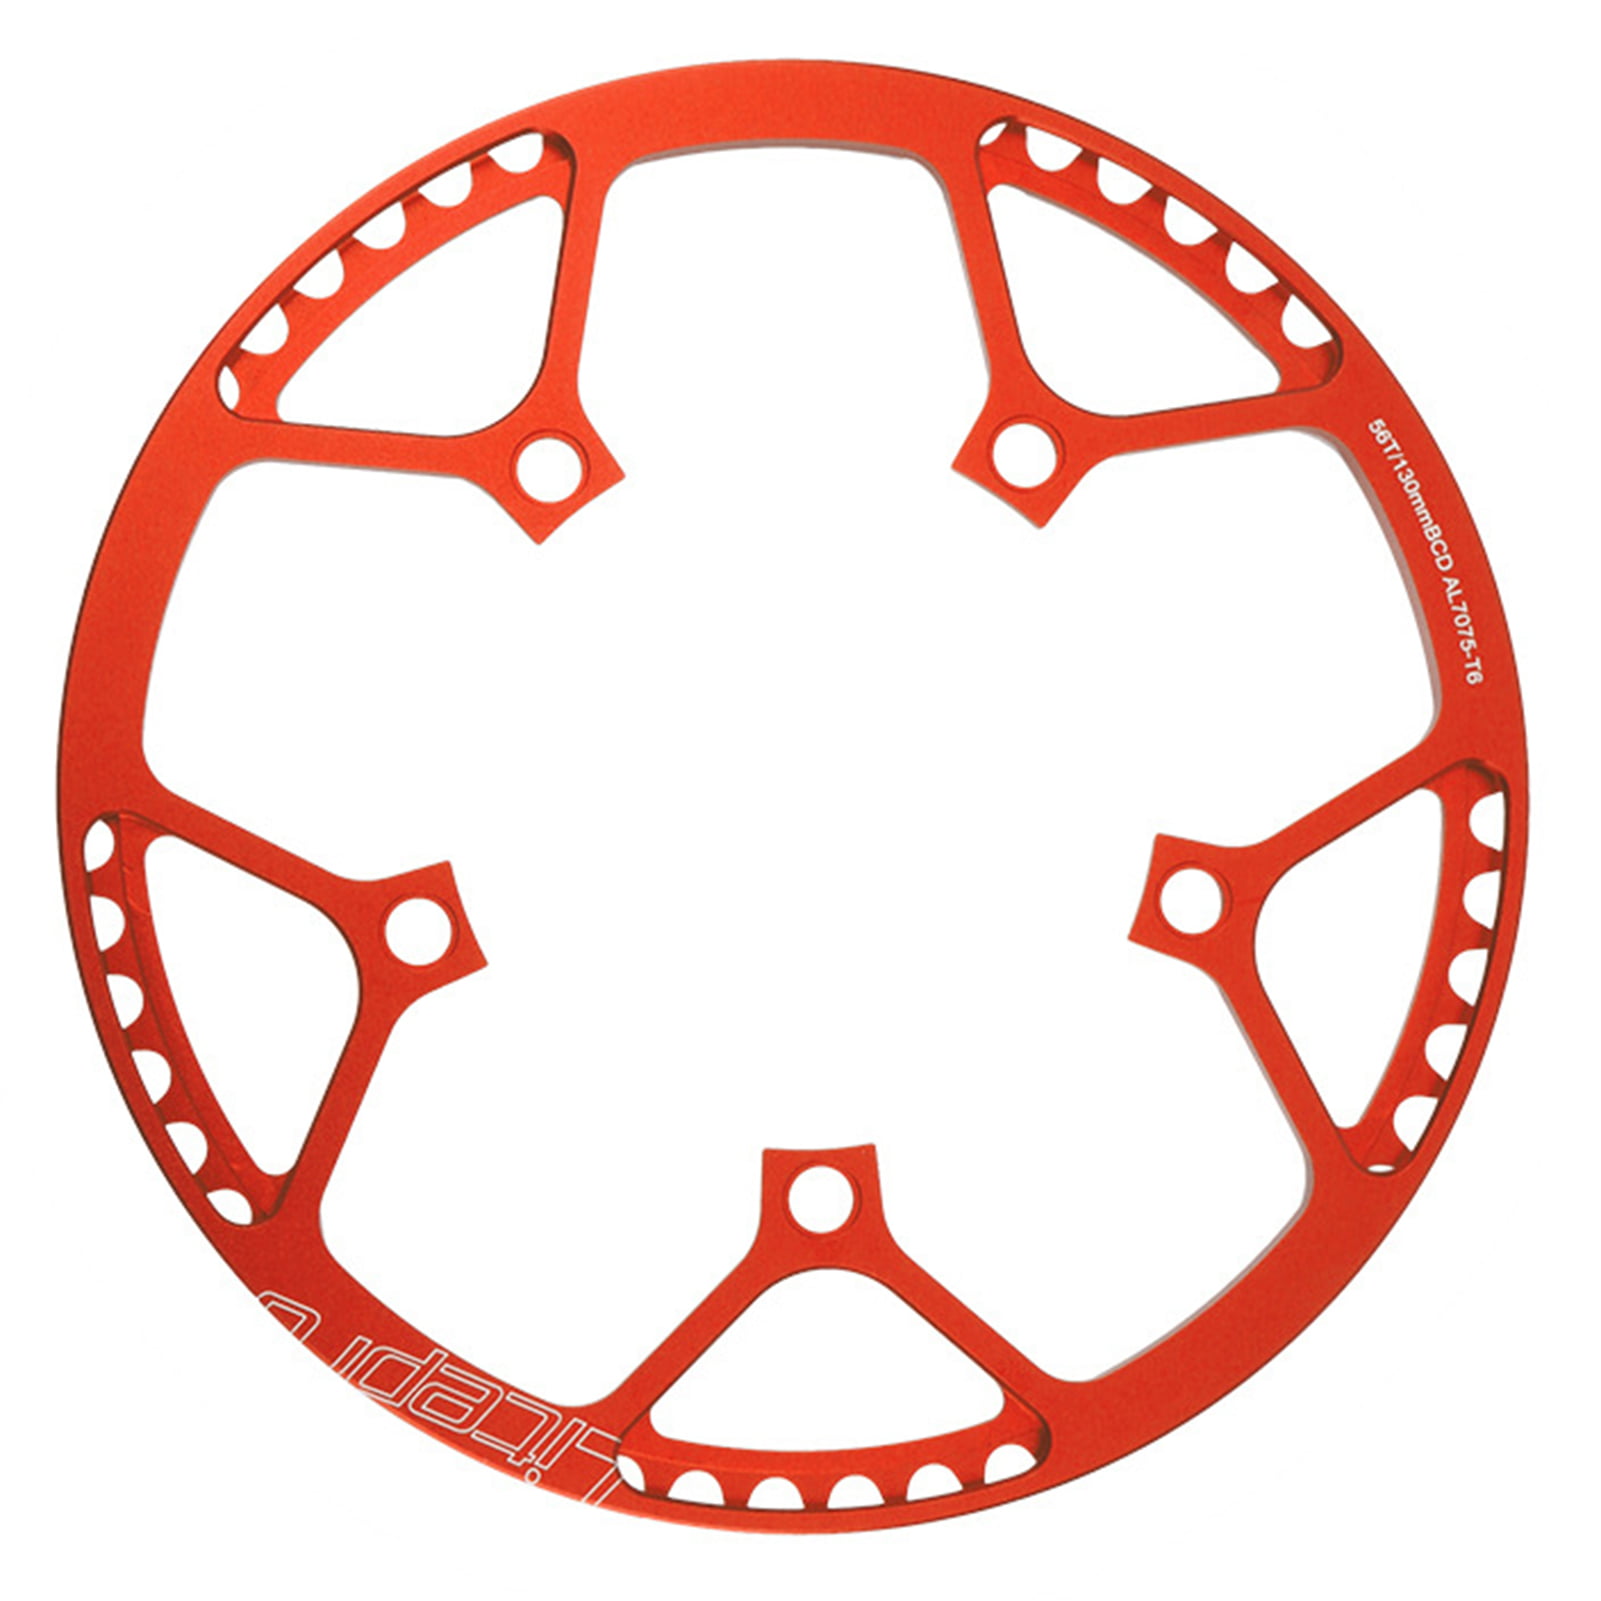 Taloit Bike Round Oval Ultralight Bike Single Chainring Bike Crankset Chainwheel Chain Ring for Road Bikes Mountain Bikes.